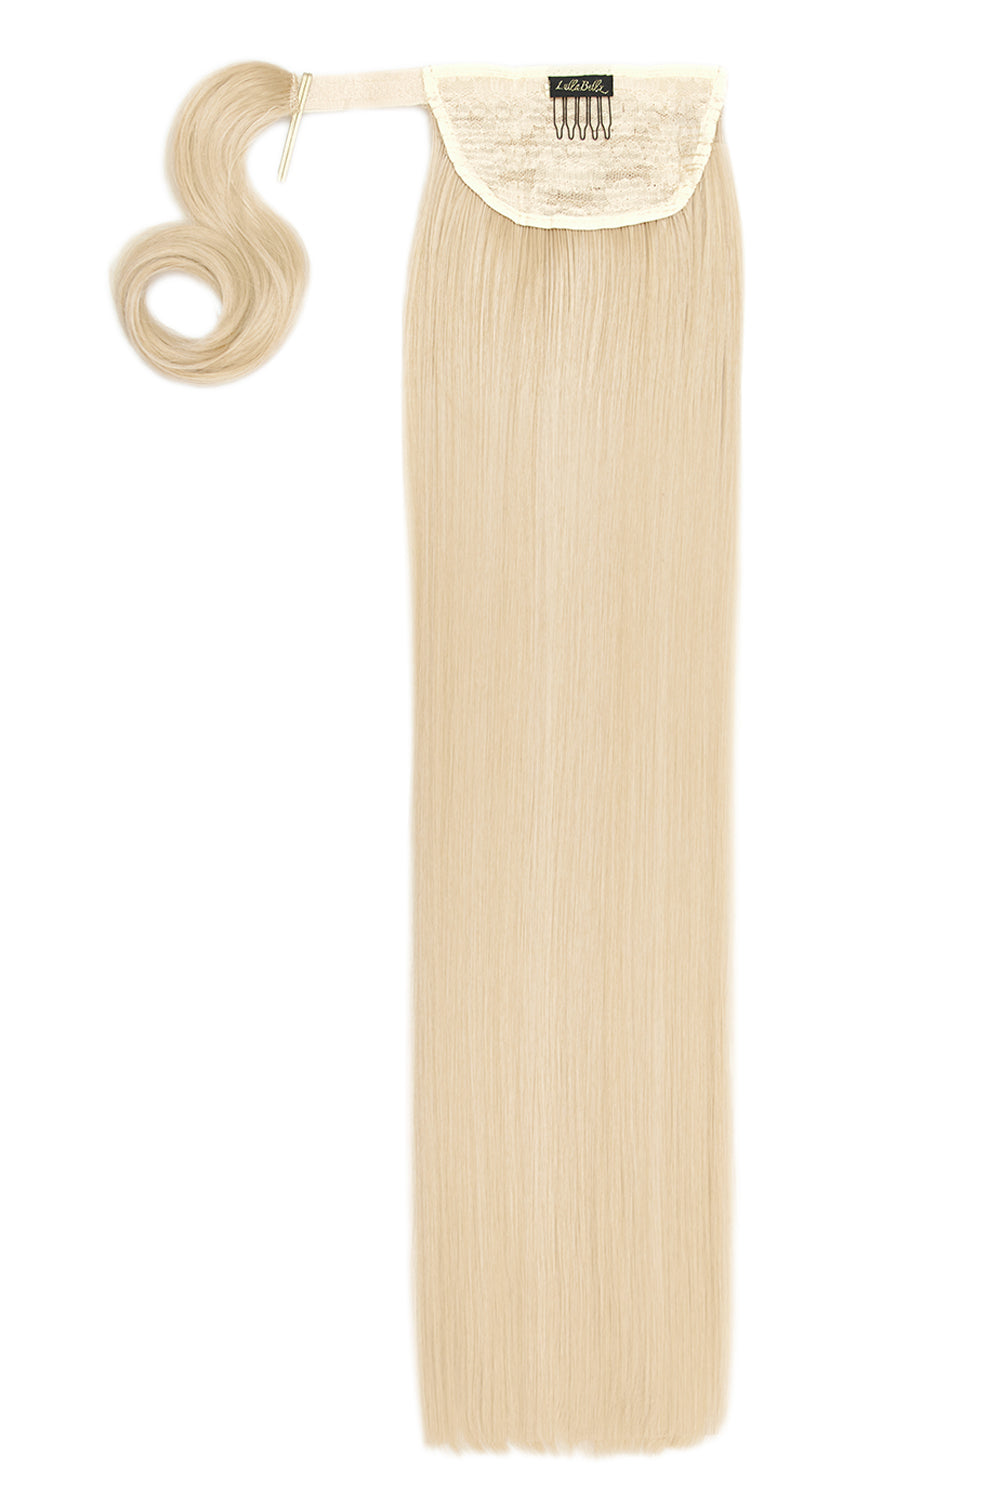 Grande Lengths 26" Straight Wraparound Ponytail - Light Blonde